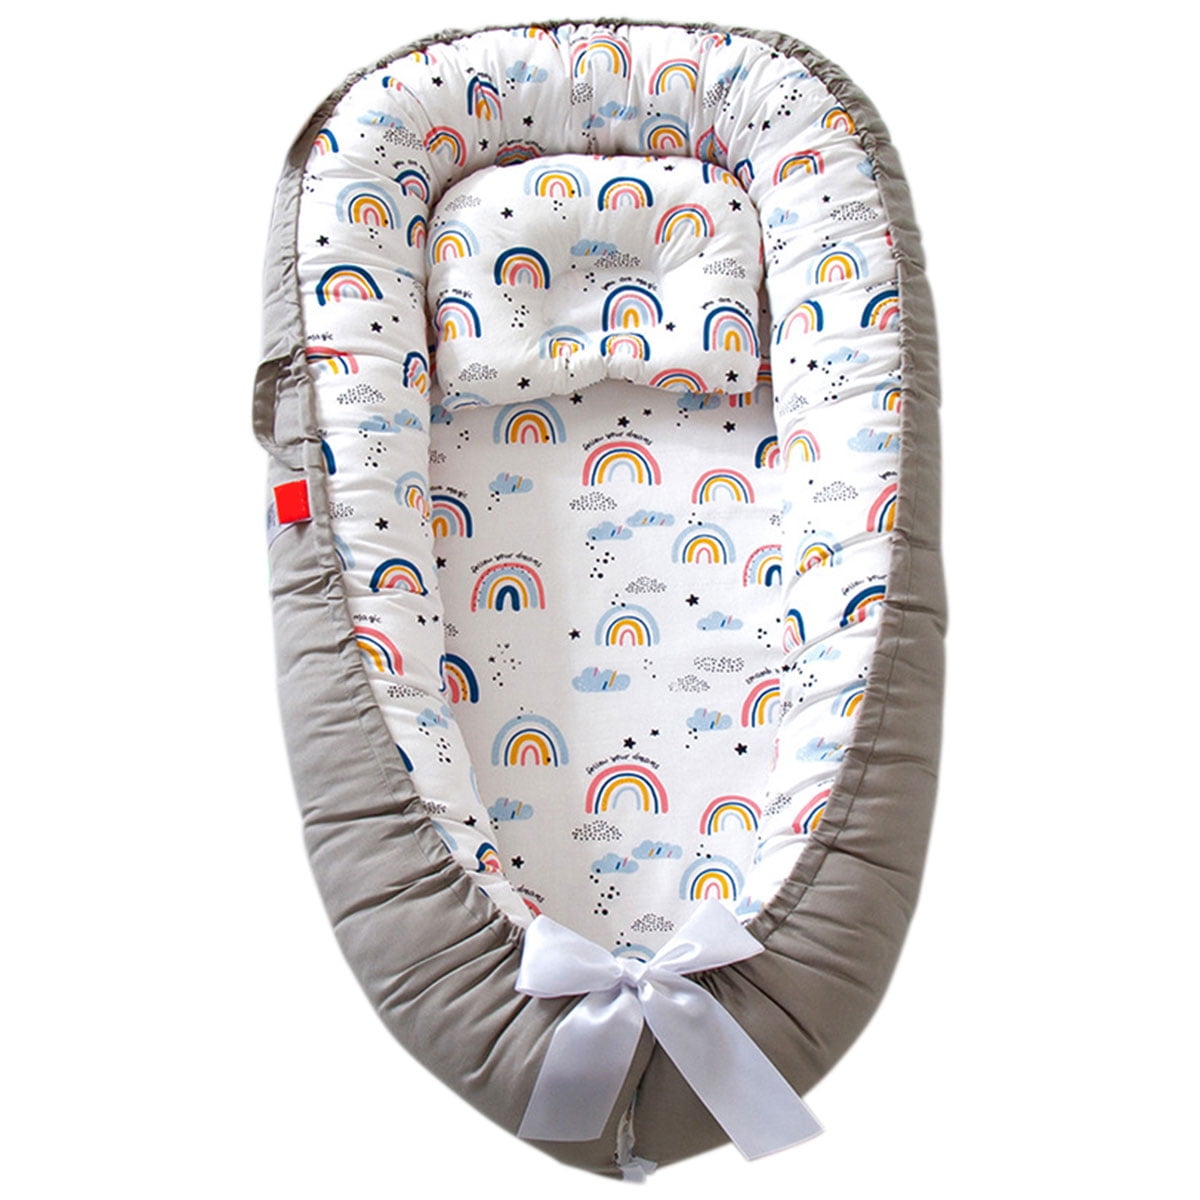 BATTILO HOME Baby Infant Floor Seats & Loungers Newborn Baby Nest Cot Portable Cribs Travel Cradle Cushion Baby Bassinet Bumper Beige Stars 